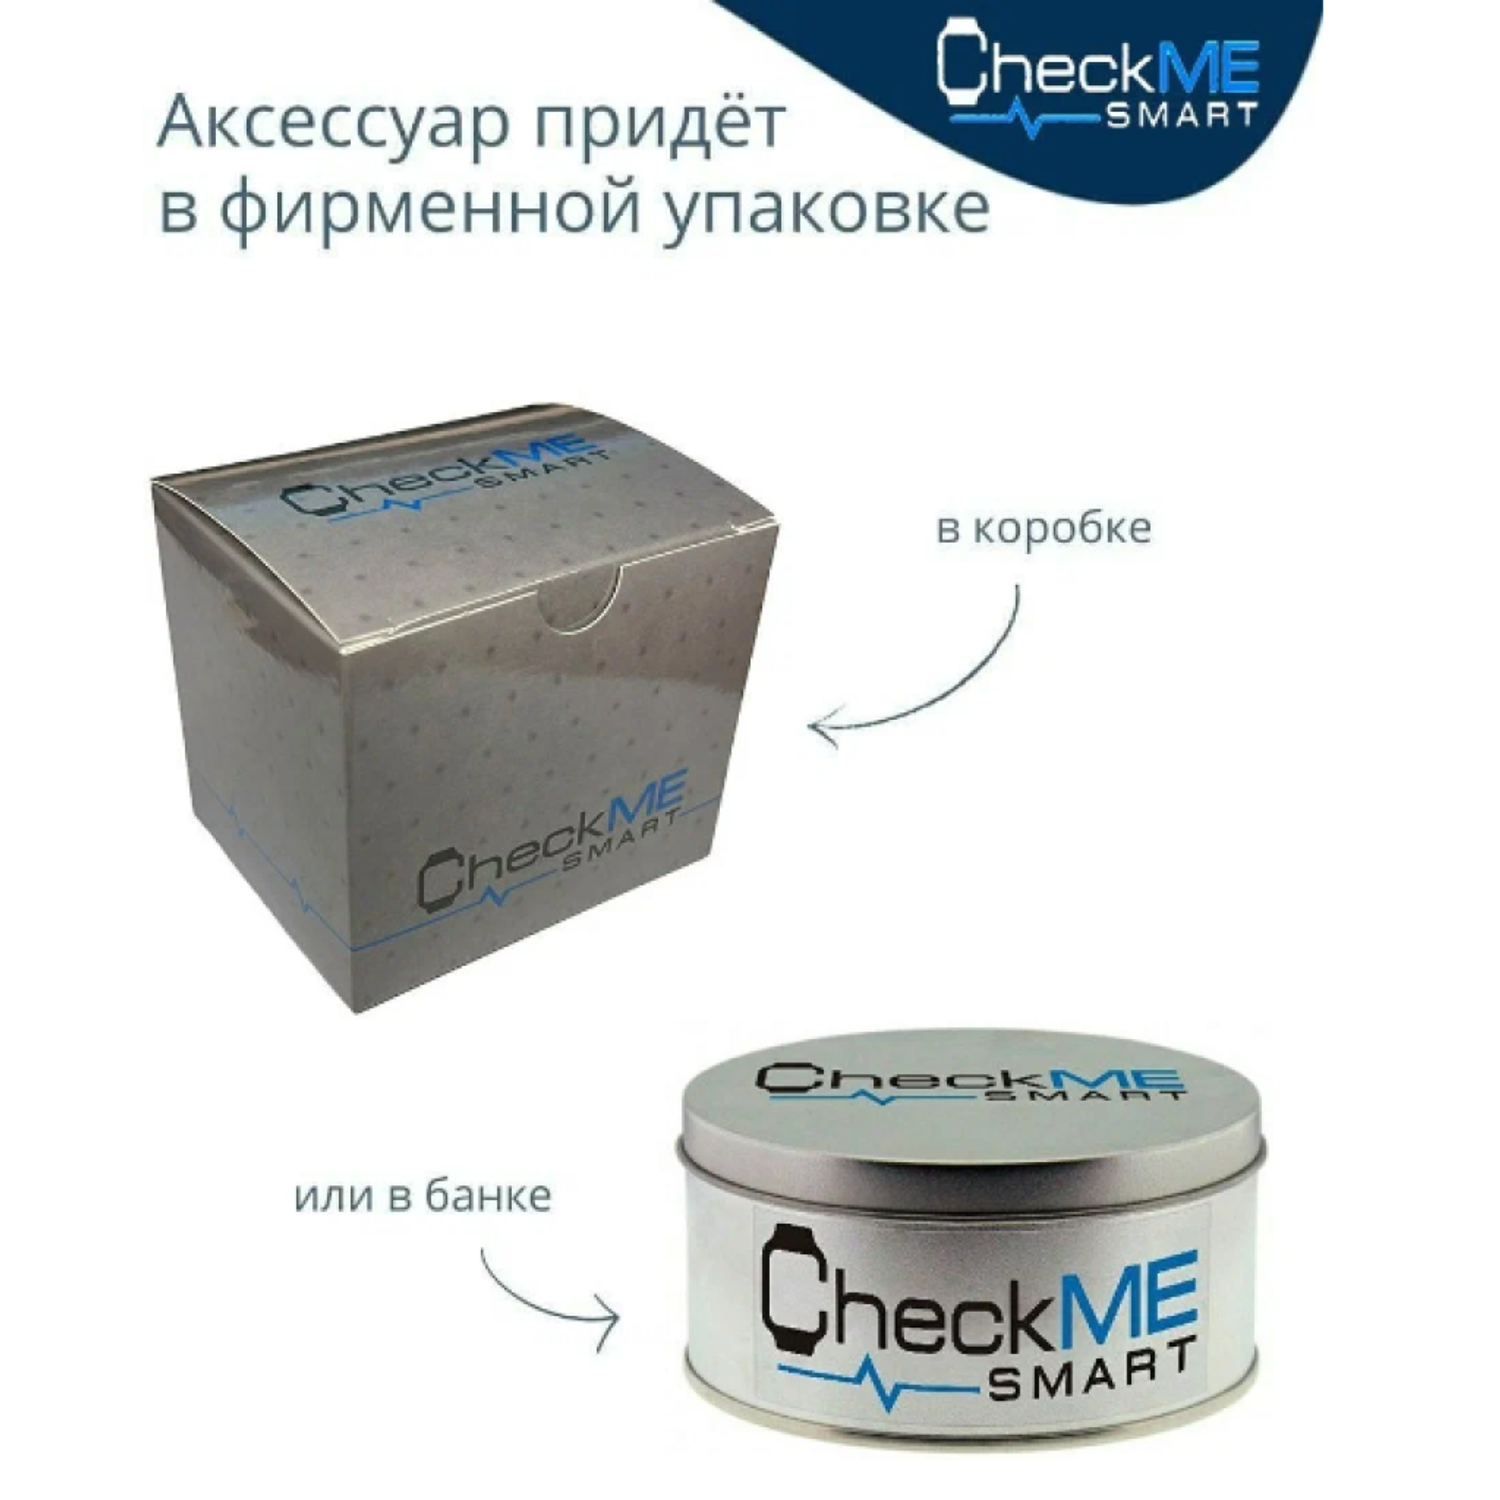 Фитнес-браслет CheckME Smart CMSQ70GNGN с термометром и пульсометром - фото 9